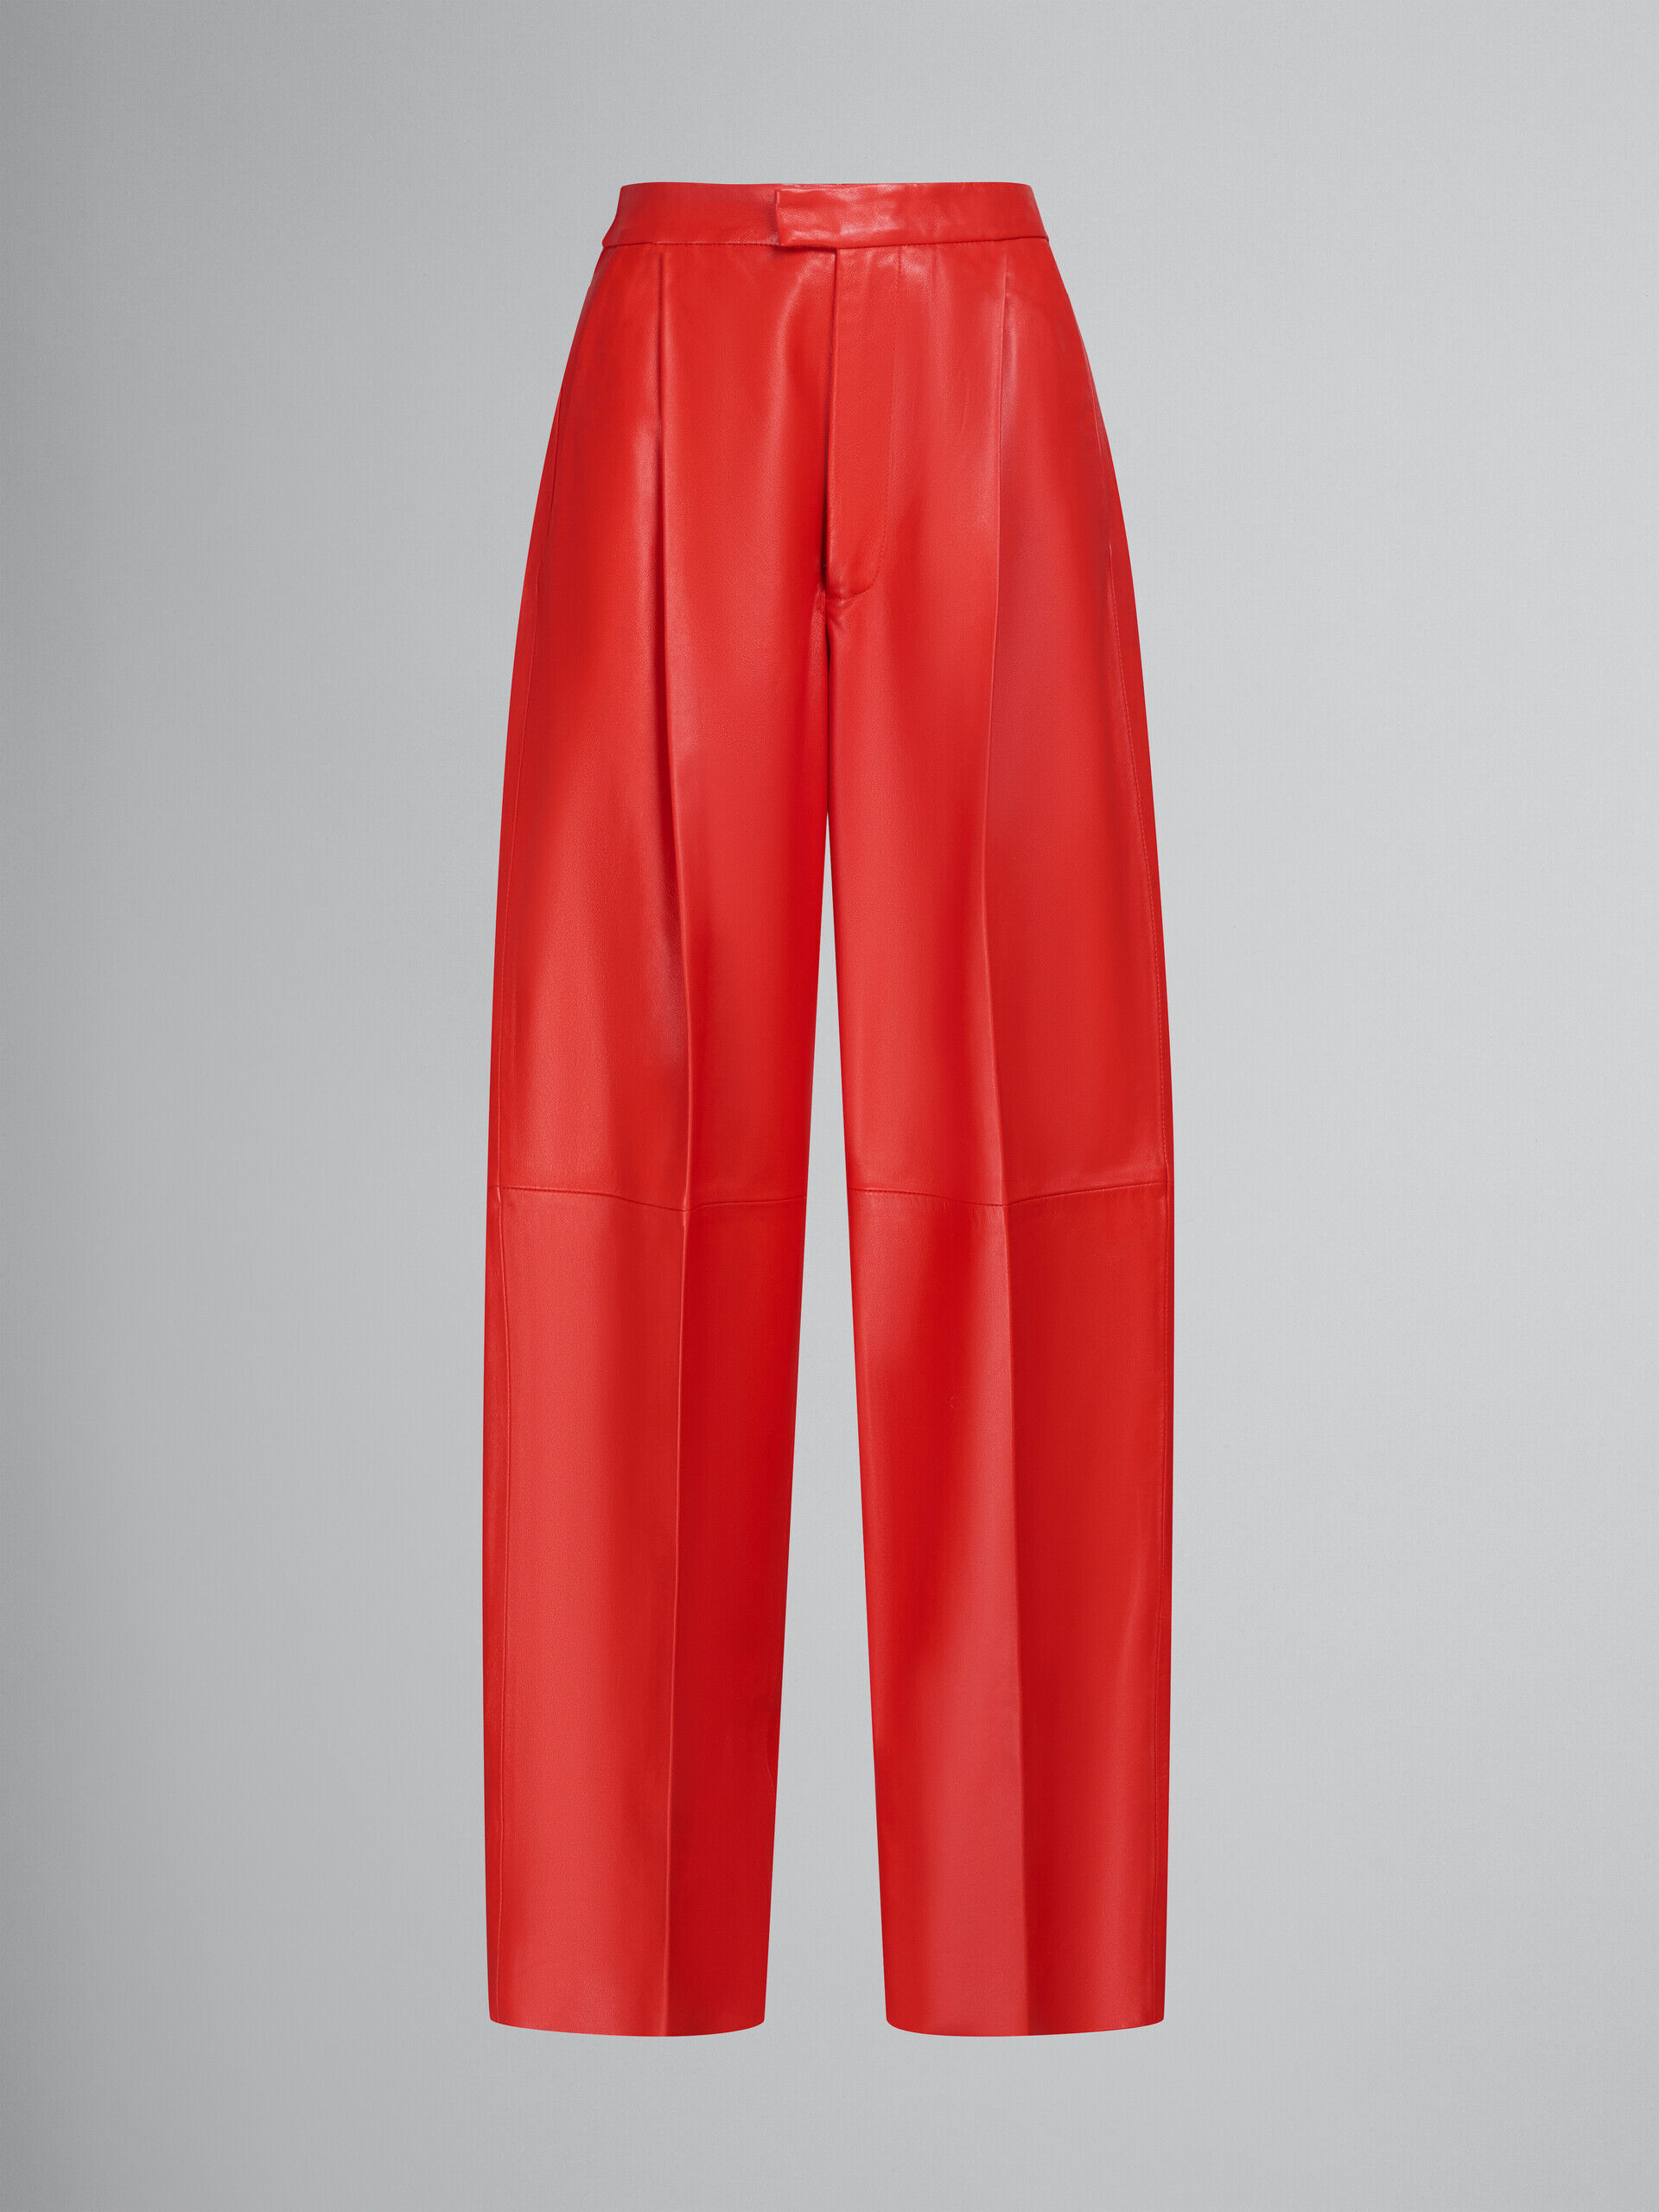 STAR by Julien Macdonald Orange Bootcut Tailored Trousers | Kaleidoscope